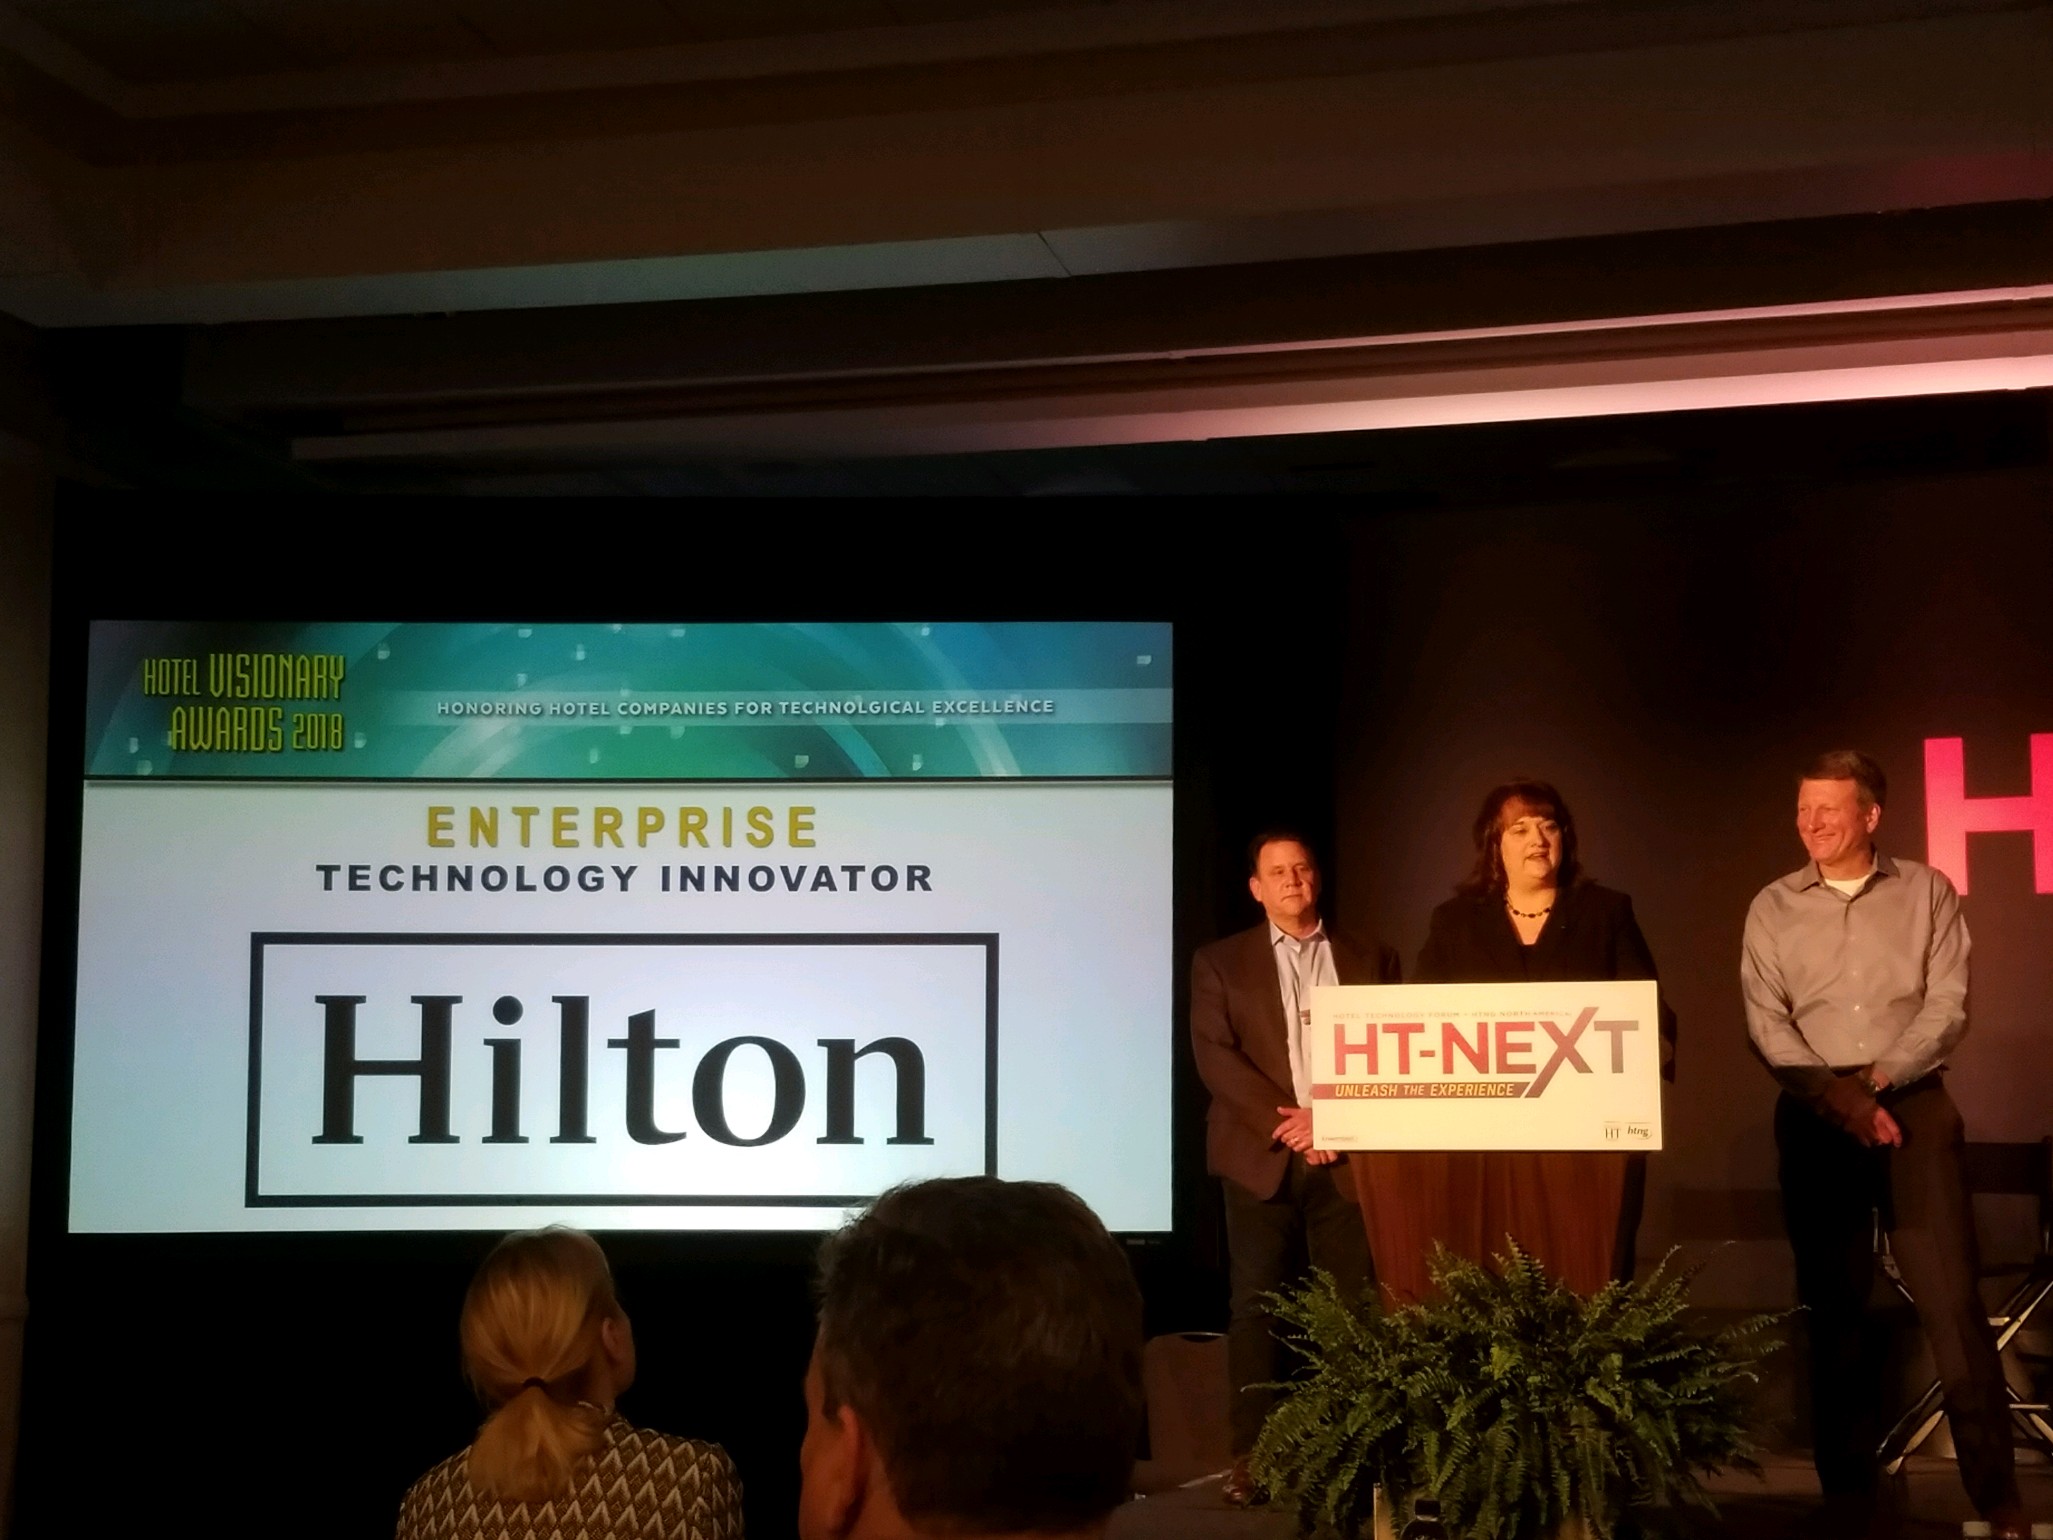 Kathleen Erikson, Director, Guest Facing Technologies for Hilton